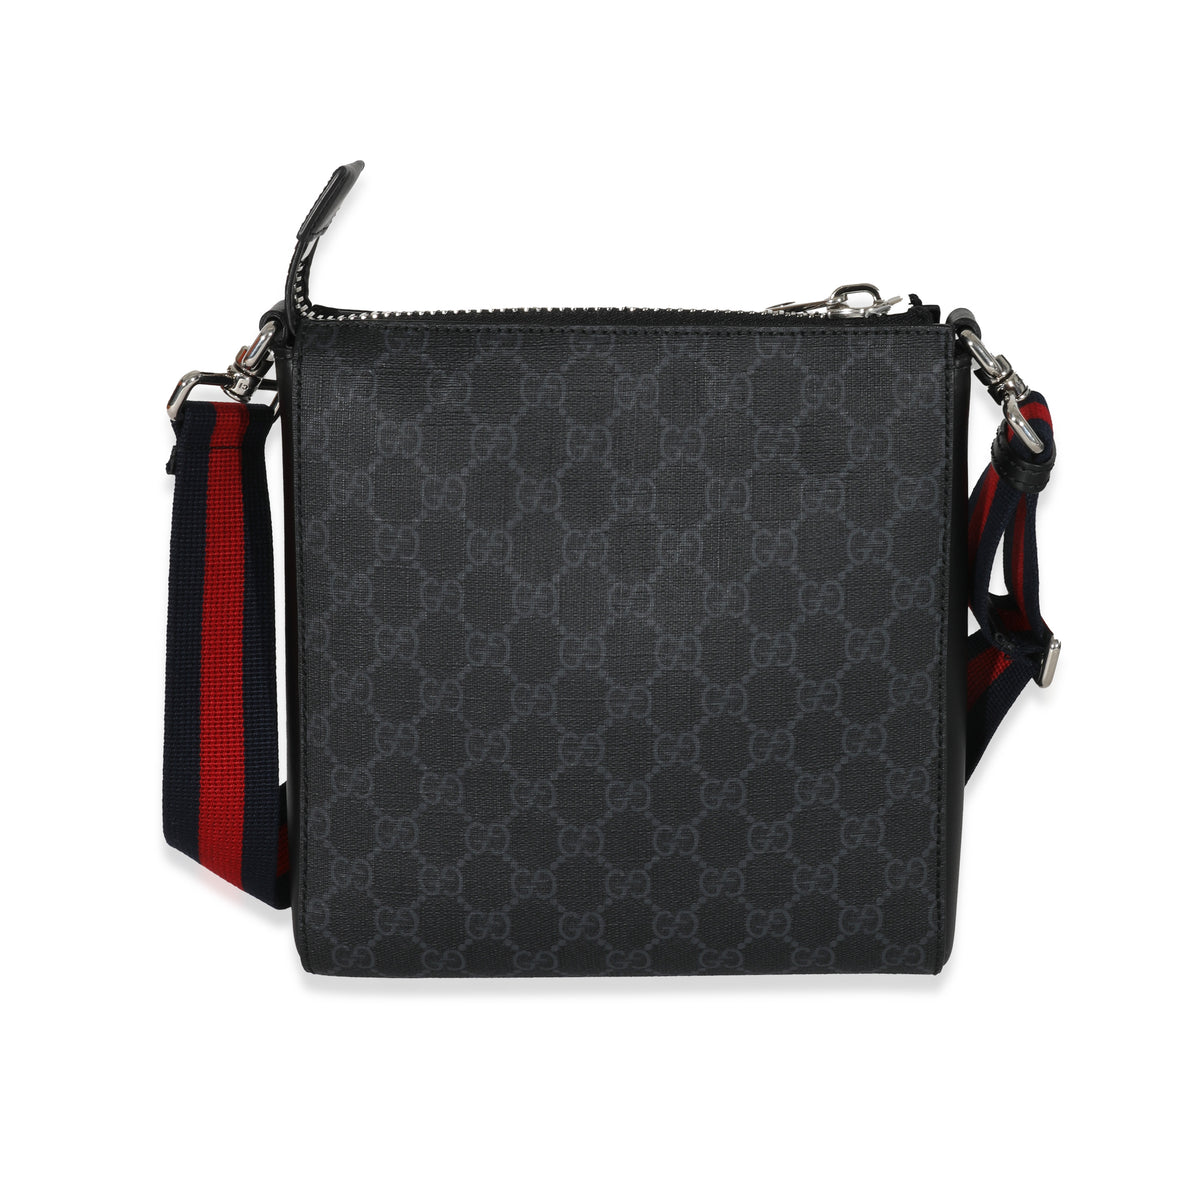 Gucci Black GG Embossed Small Messenger Bag